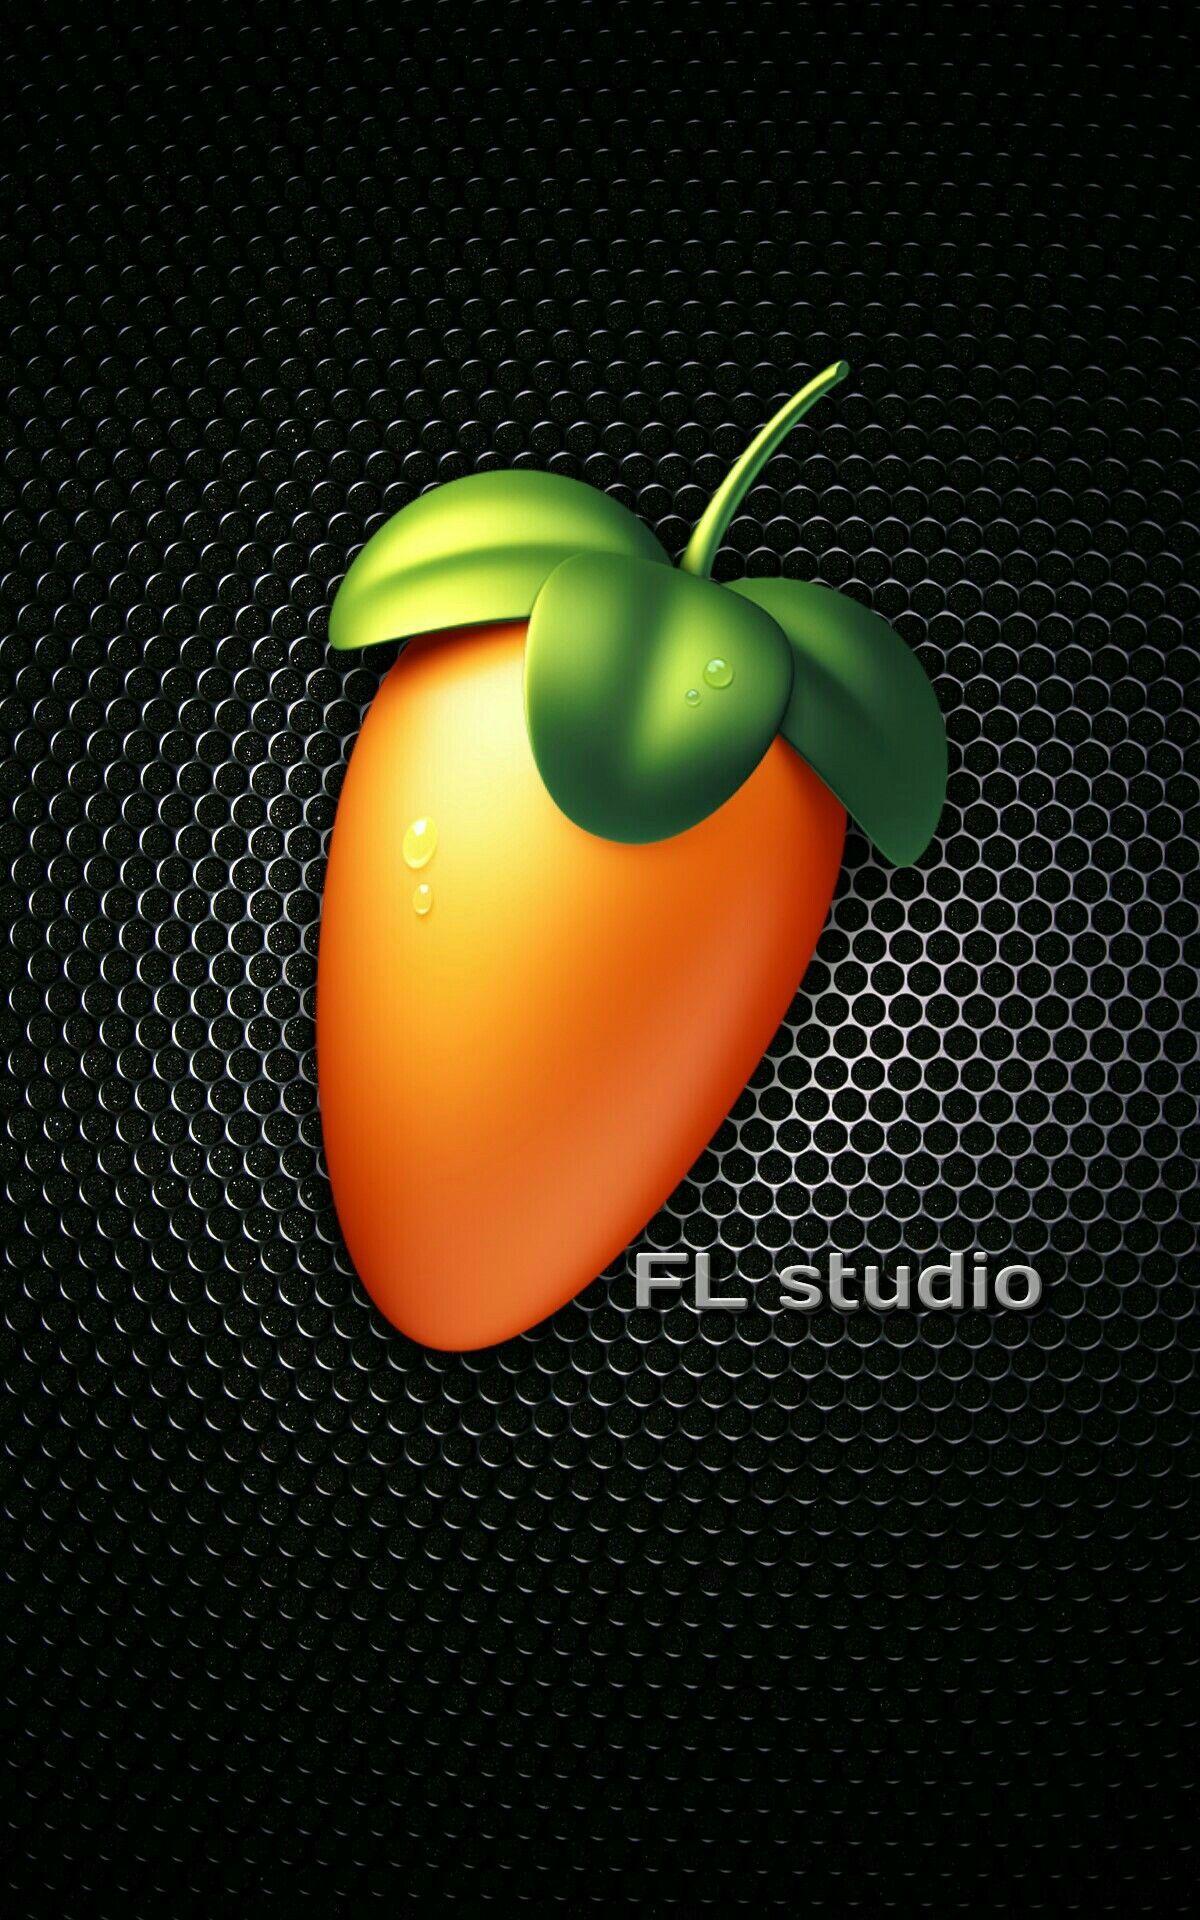 fl studio logo 8bit